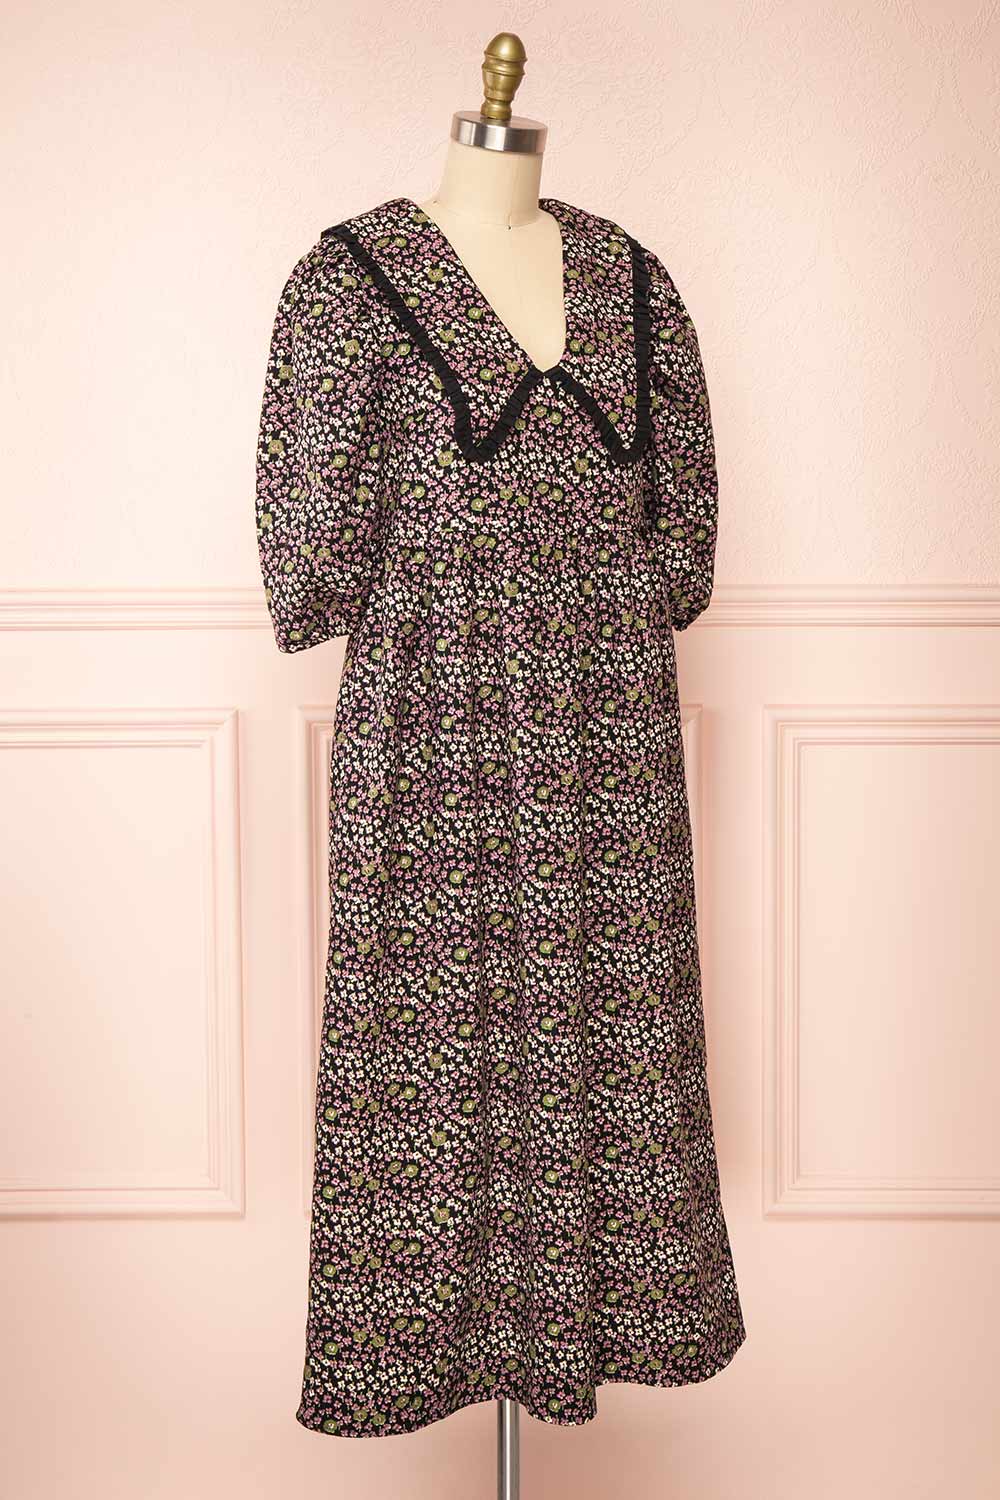 Farrah Midi Floral Dress w/ Peter Pan Collar | Boutique 1861 side view